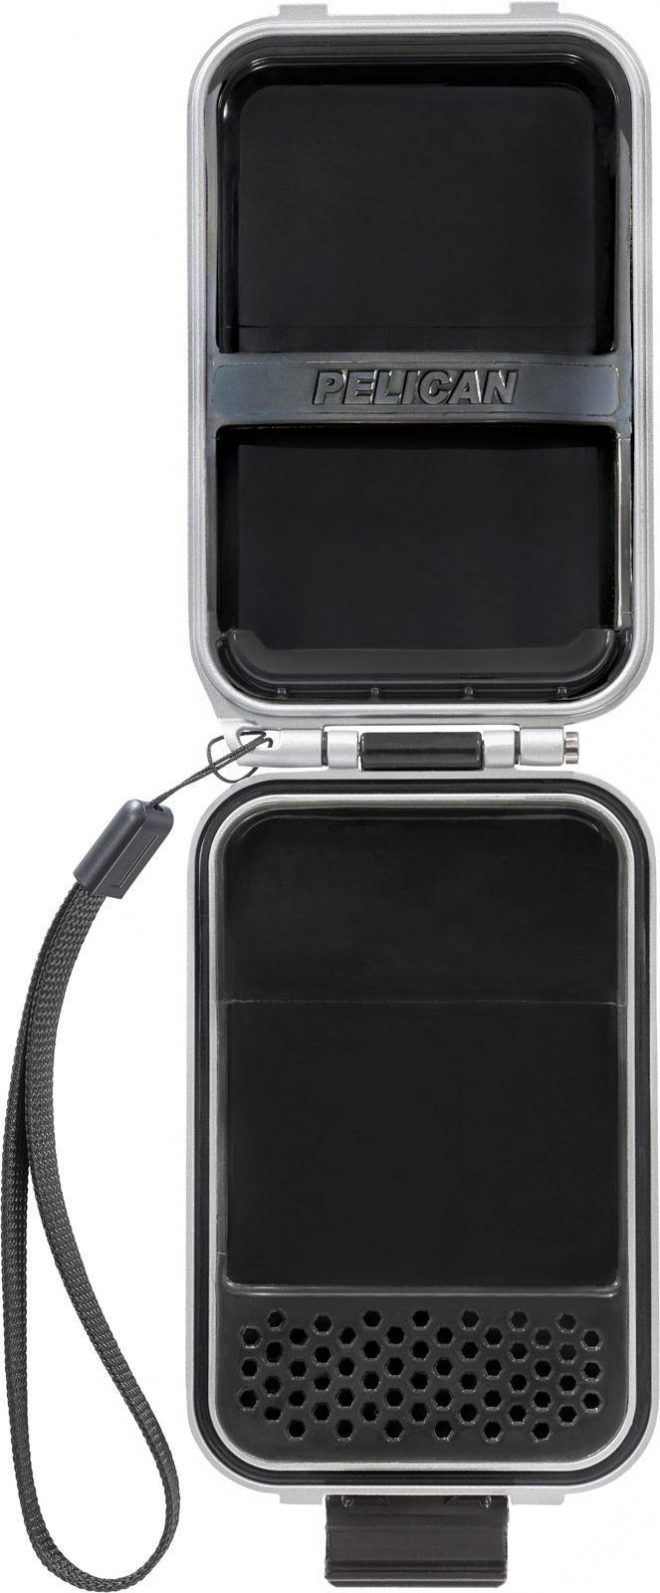 Pelican G5 Personal Utility RF Field Wallet: The Ultimate EDC Wallet